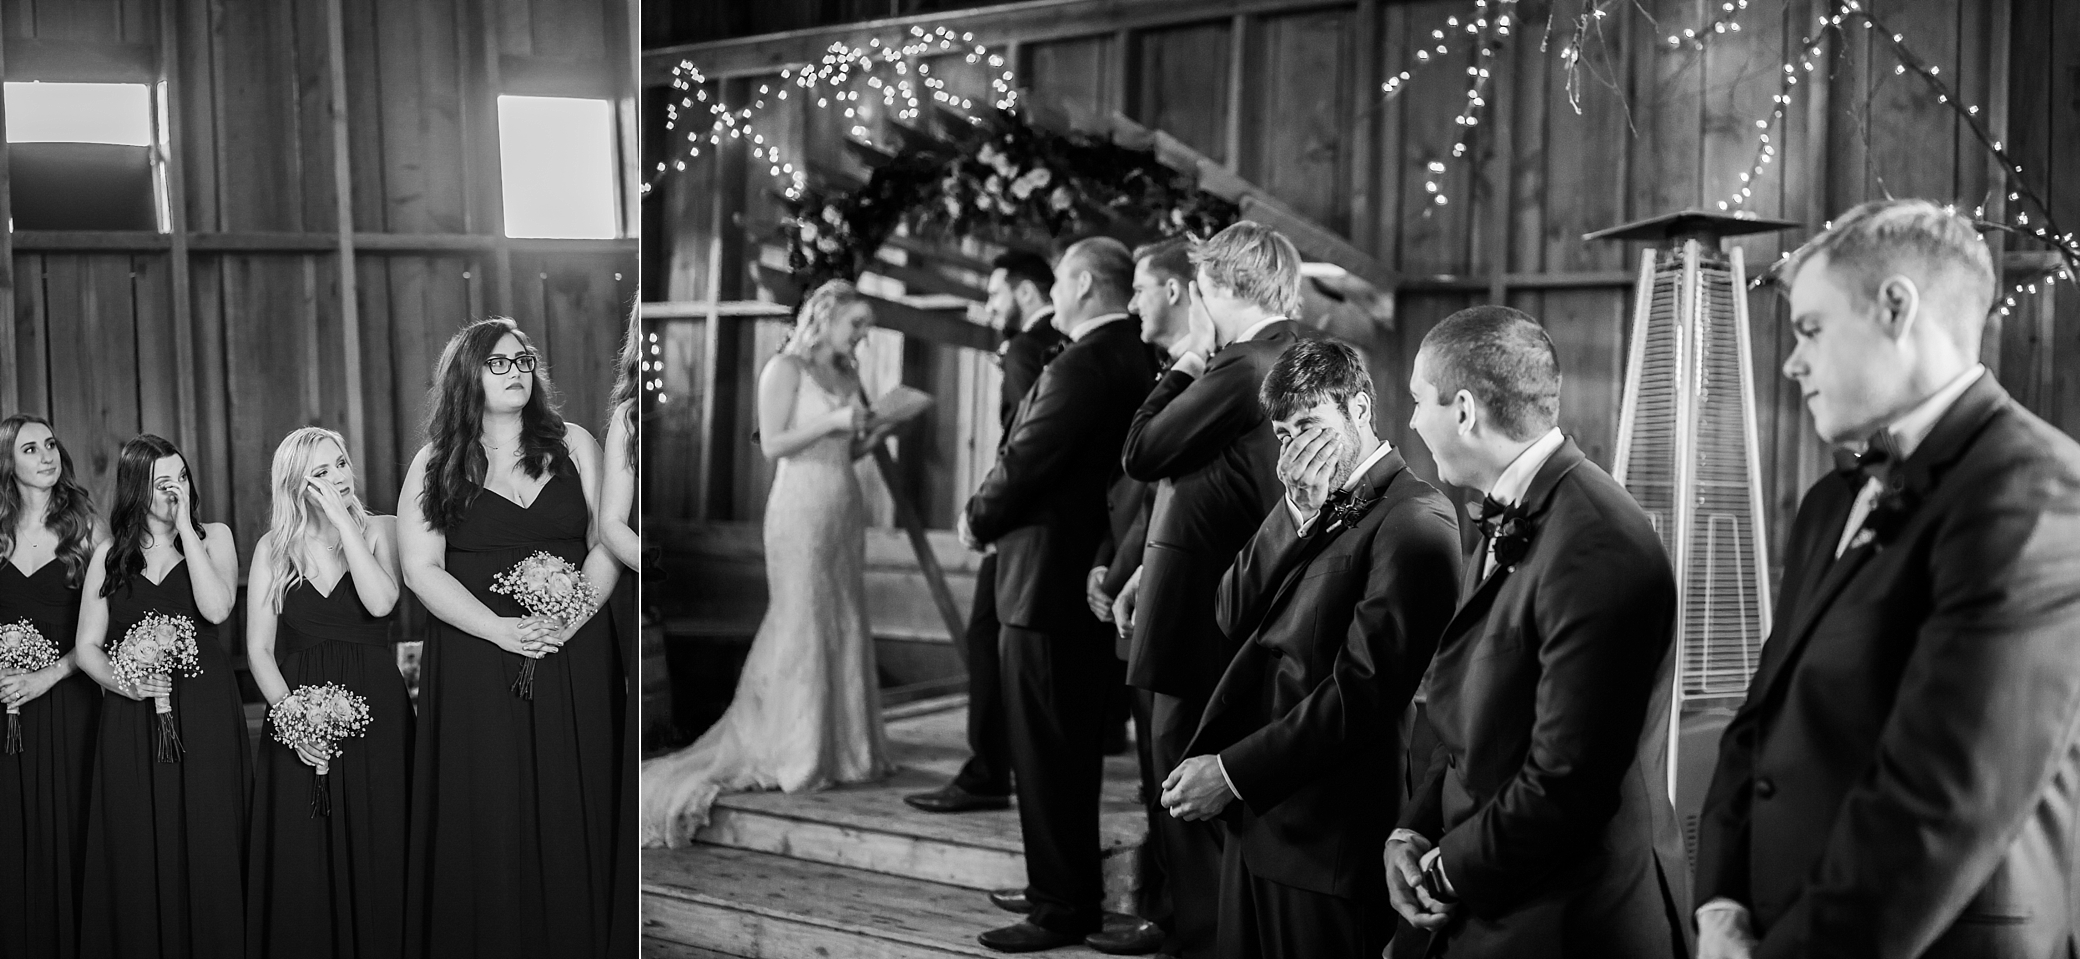 Wedding party during wedding ceremony | Megan Montalvo Photography 